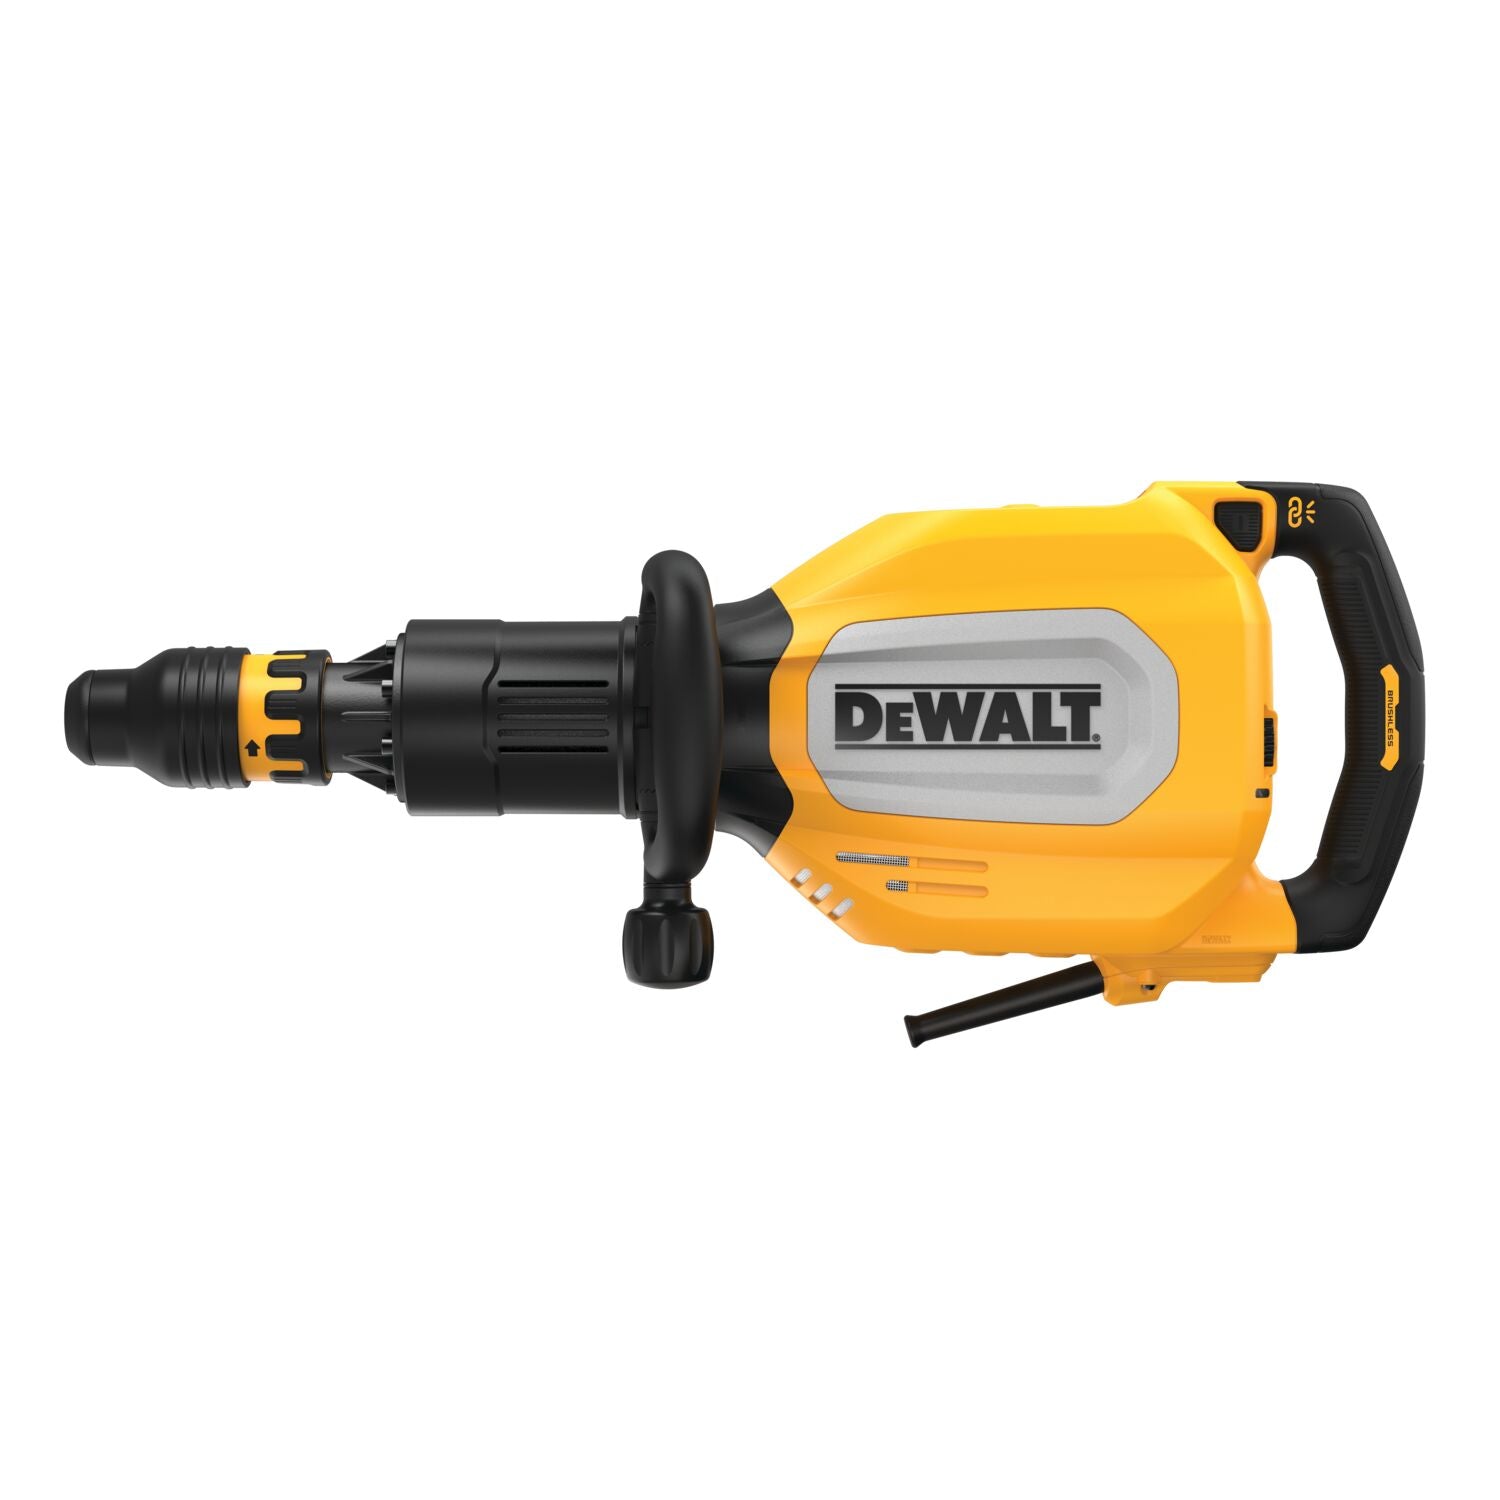 DEWALT D25911K - 27 lbs SDS MAX Inline Chipping Hammer Kit